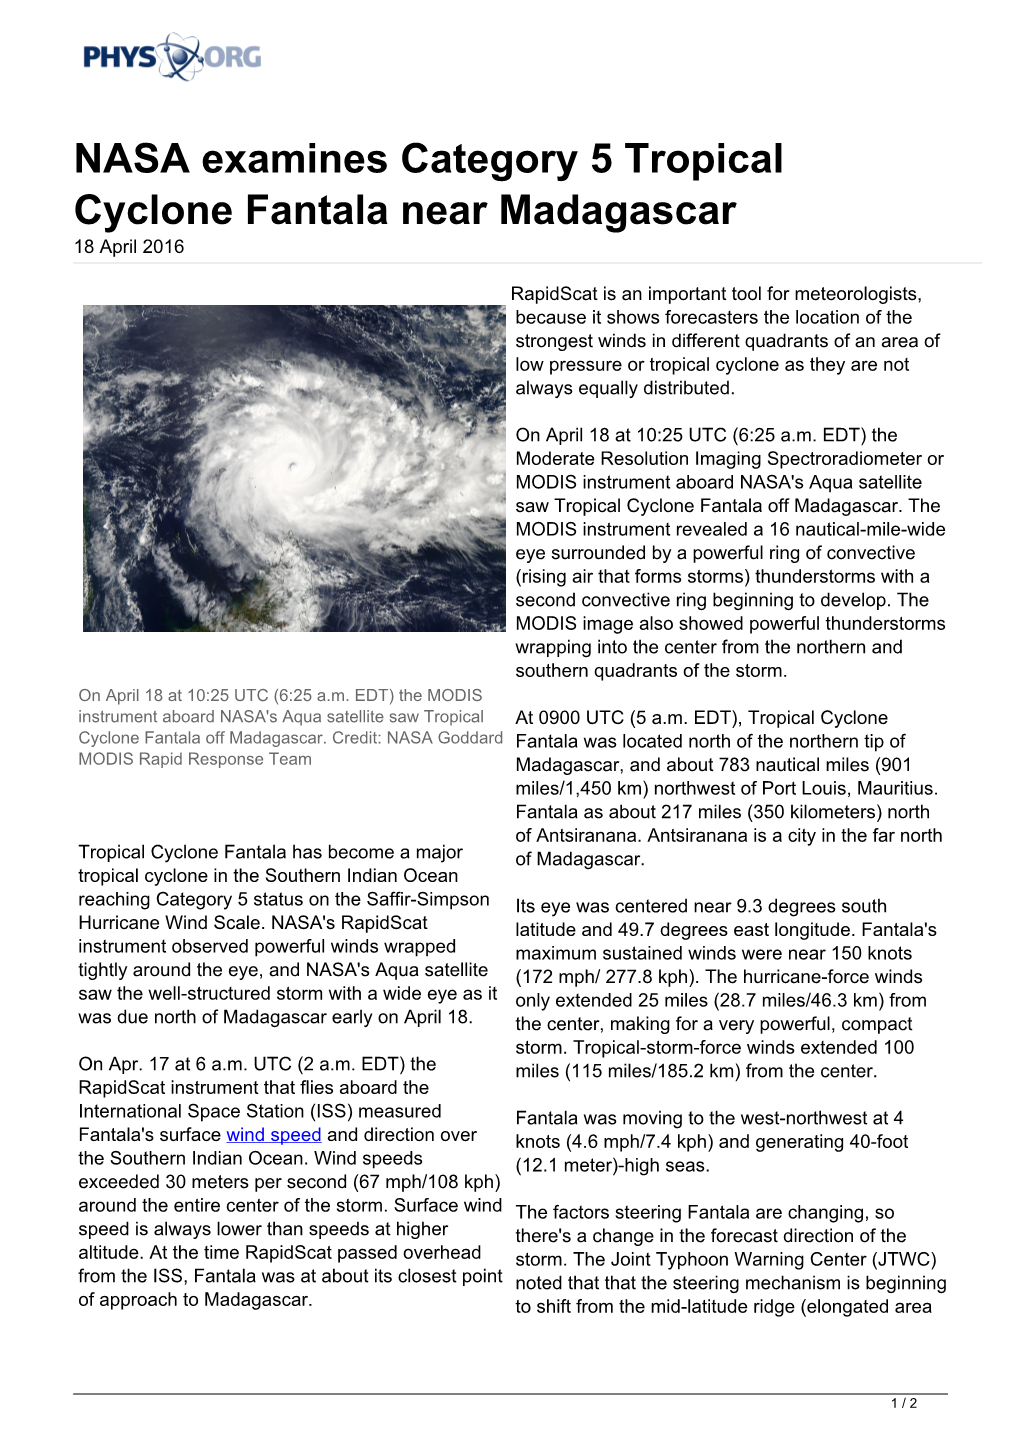 NASA Examines Category 5 Tropical Cyclone Fantala Near Madagascar 18 April 2016